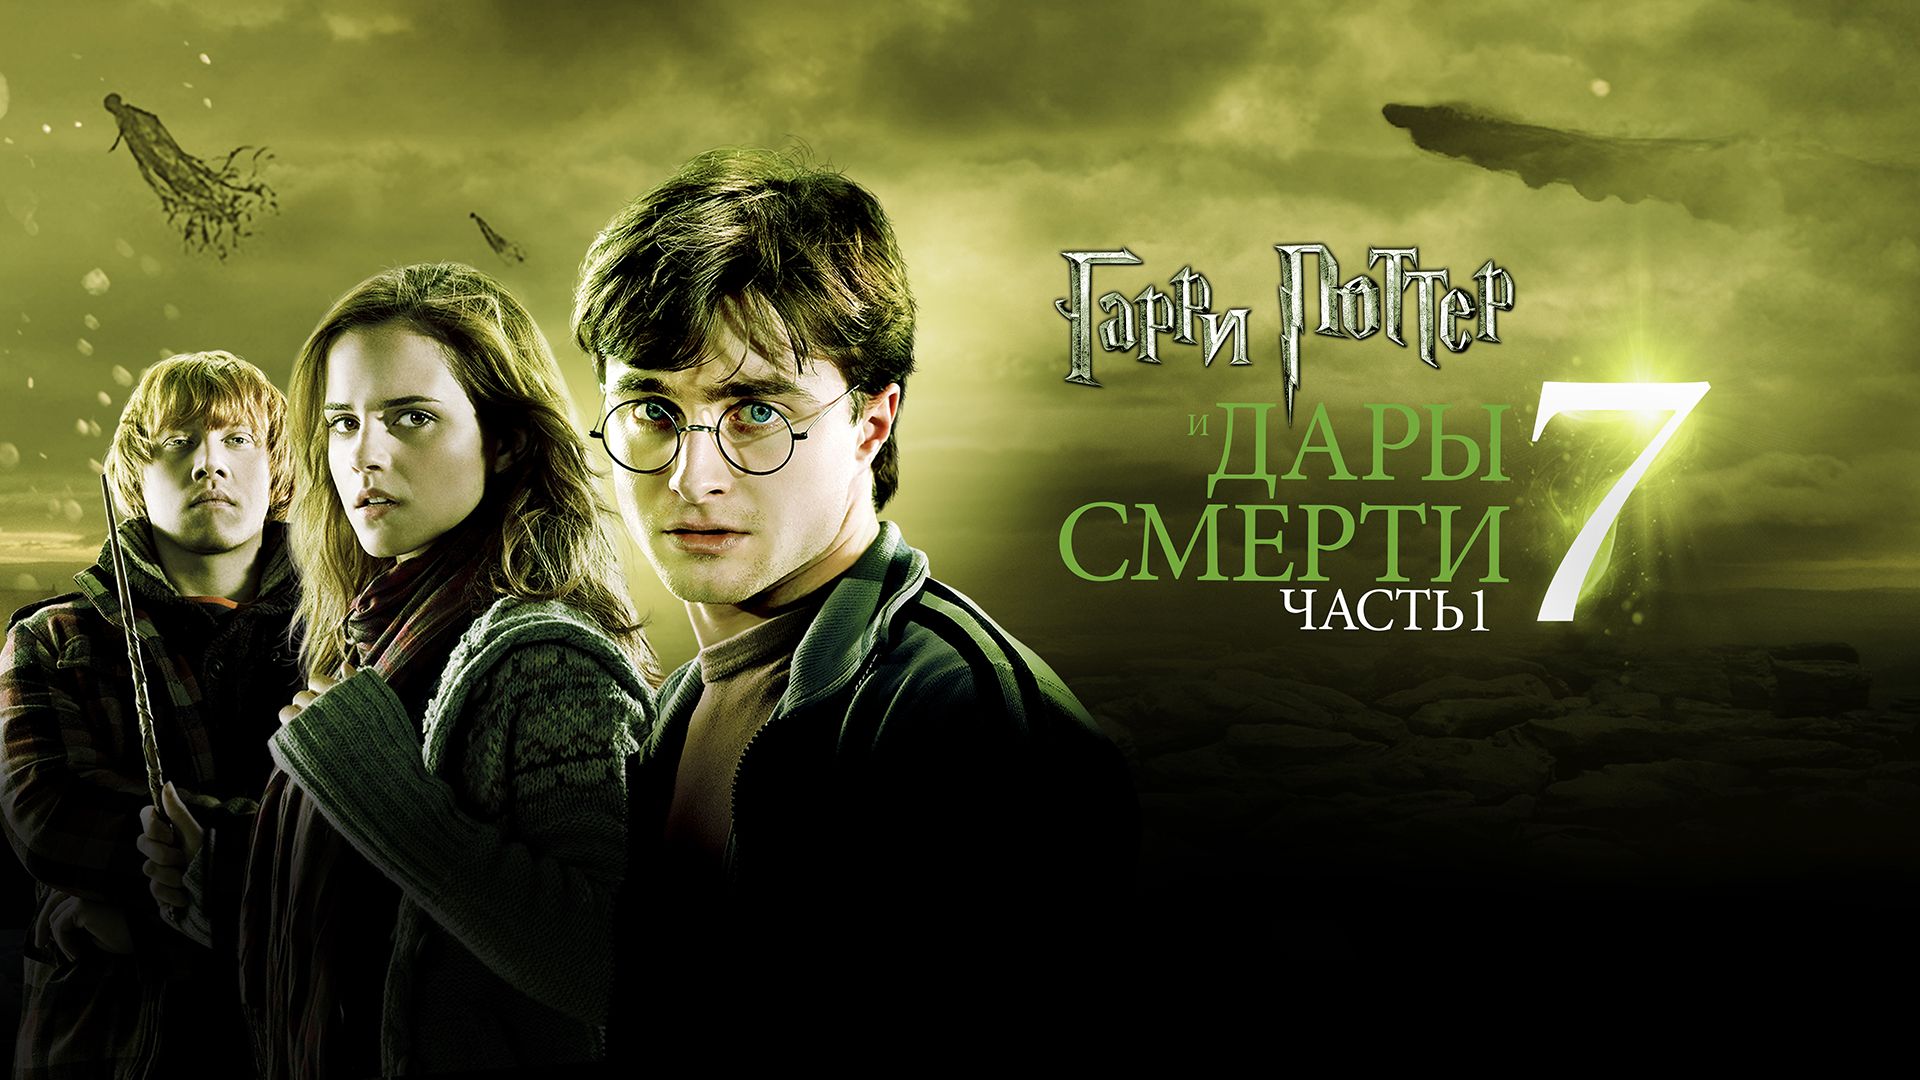 Гарри Поттер и Дары смерти: Часть 1 | Harry Potter and the Deathly Hallows - Part 1 (2010)